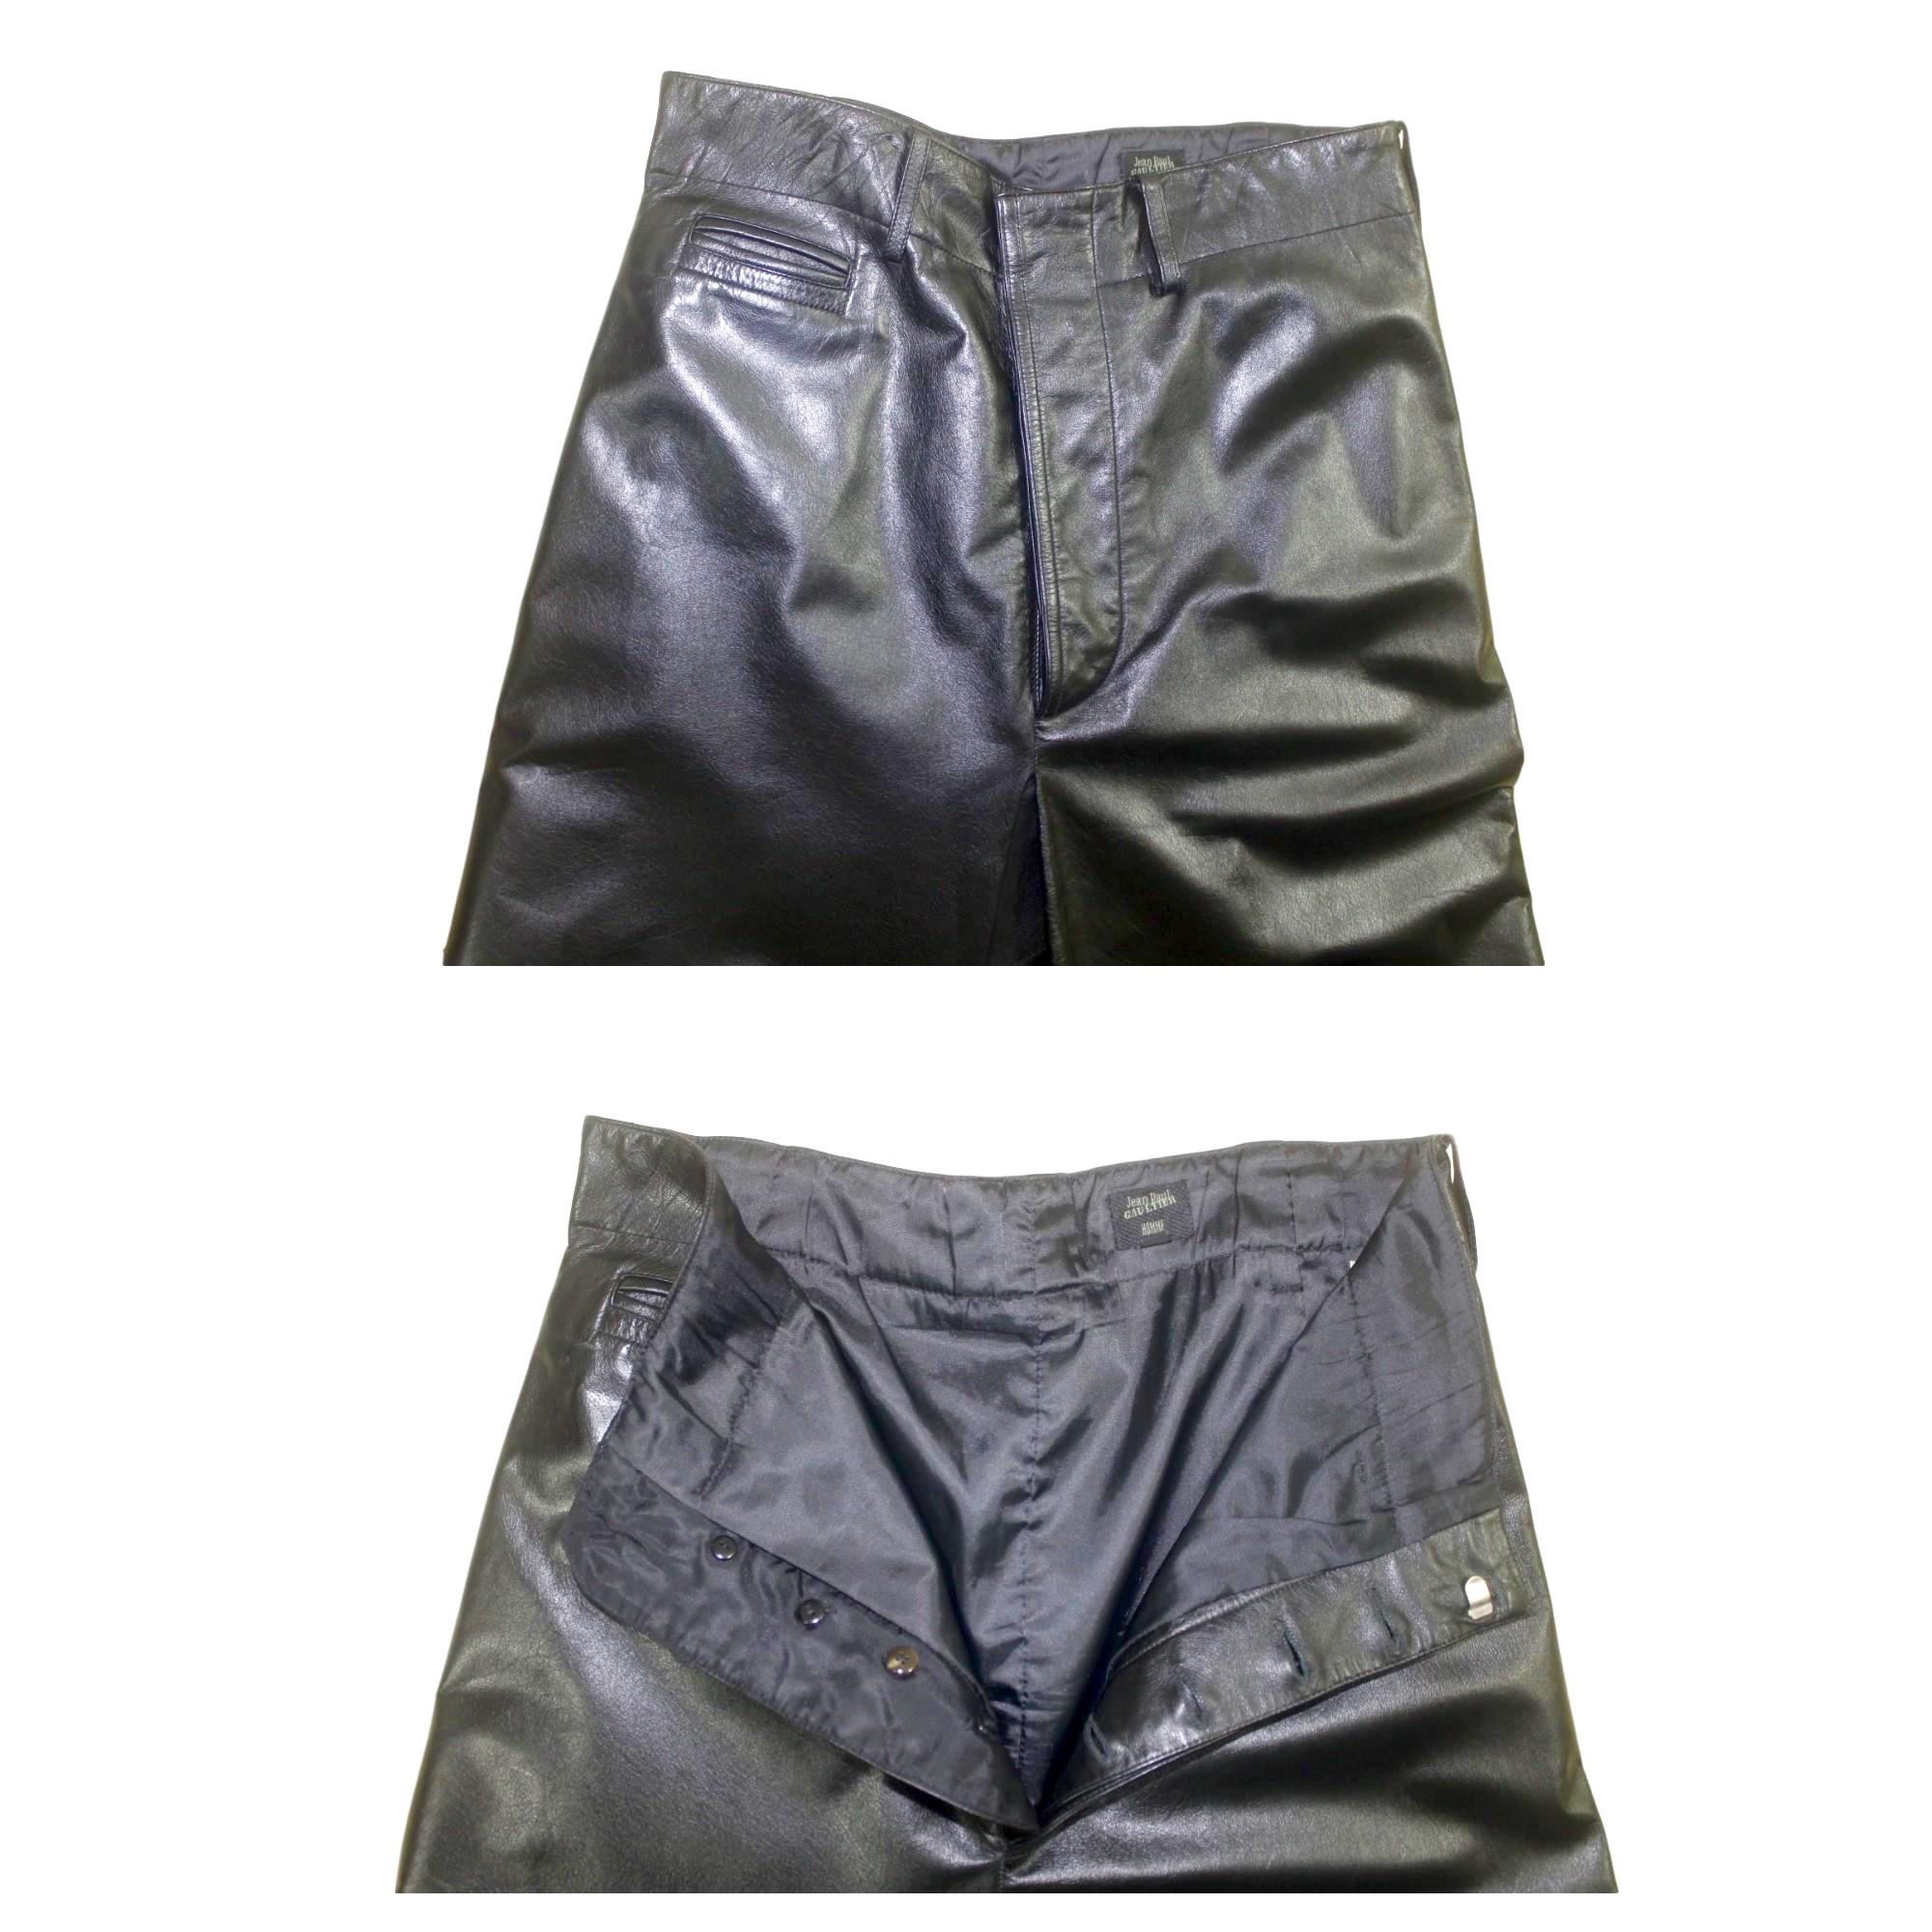 Jean Paul Gaultier Homme 1990s Leather 'Men in Skirts' Full Length 7